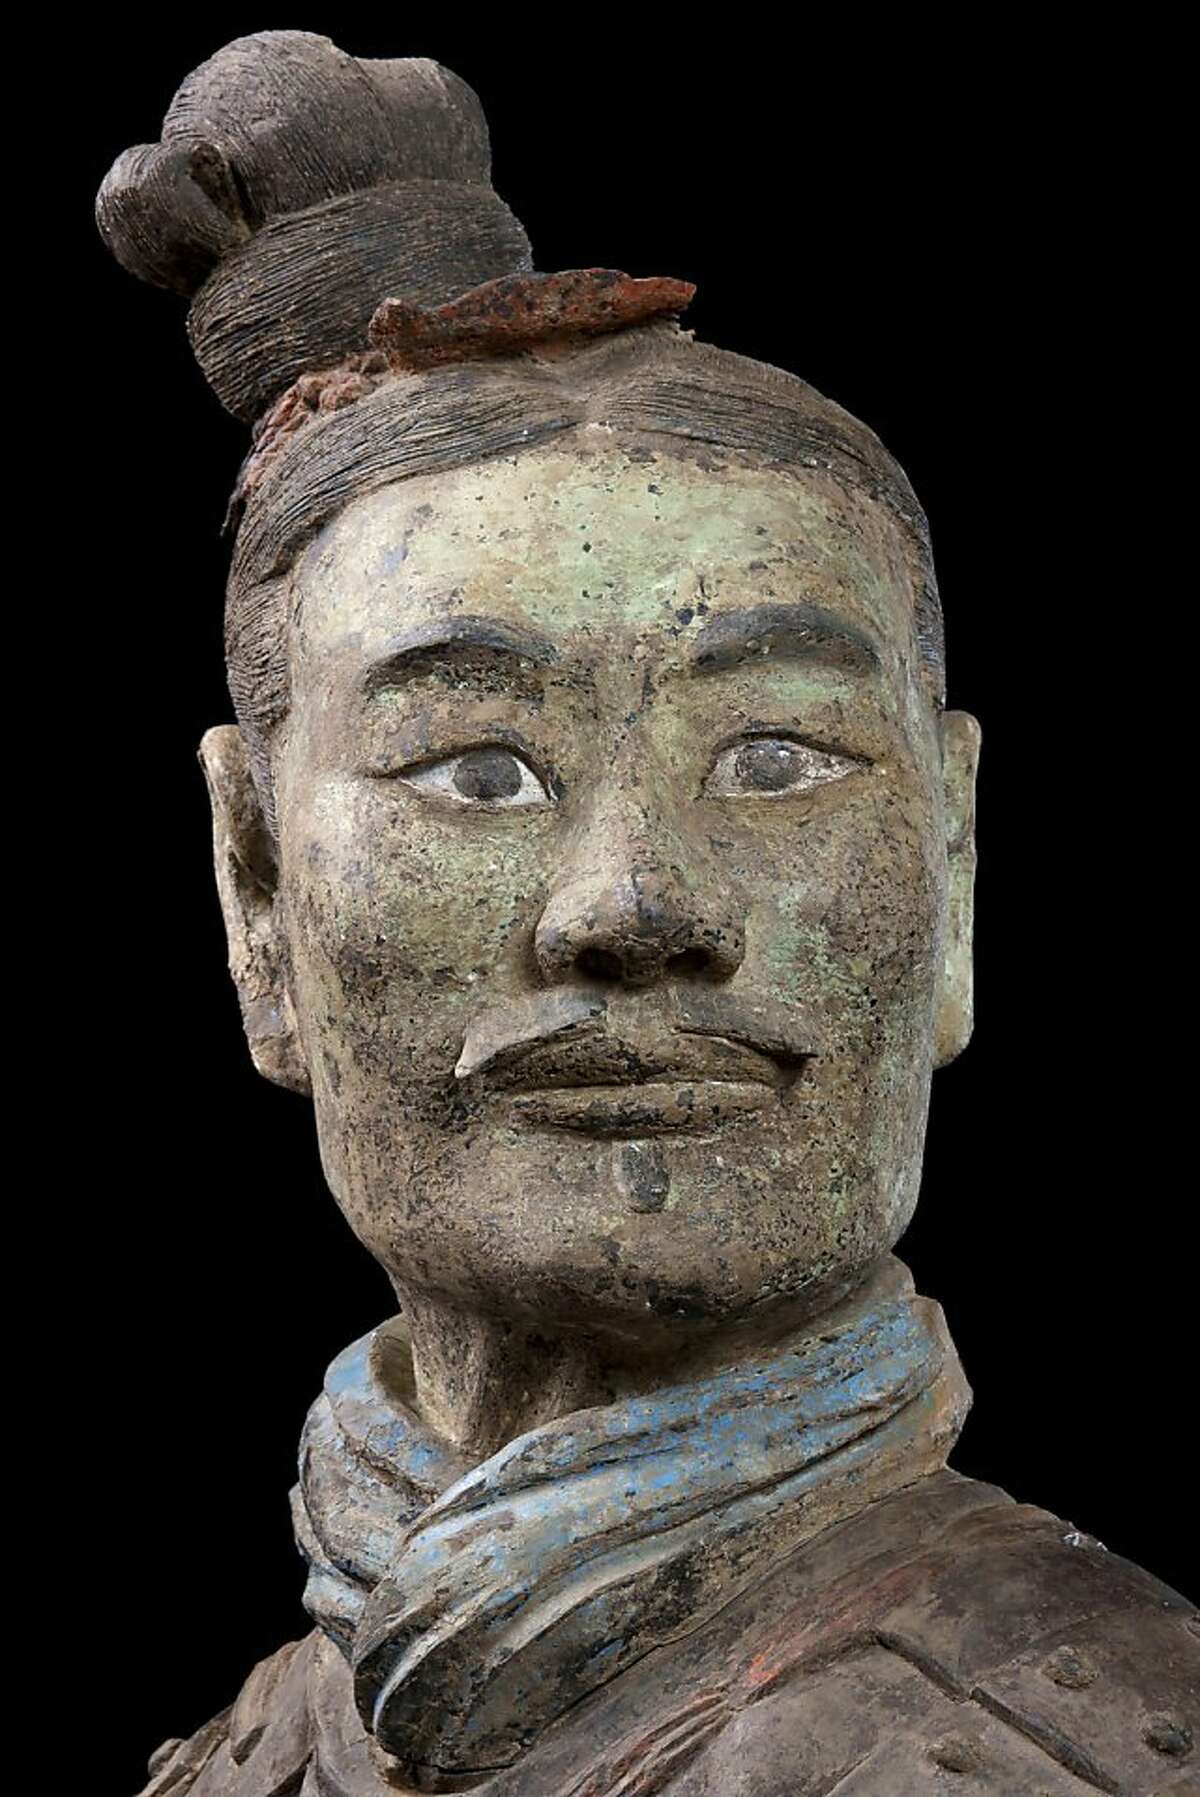 'Terracotta Warriors' at Asian museum